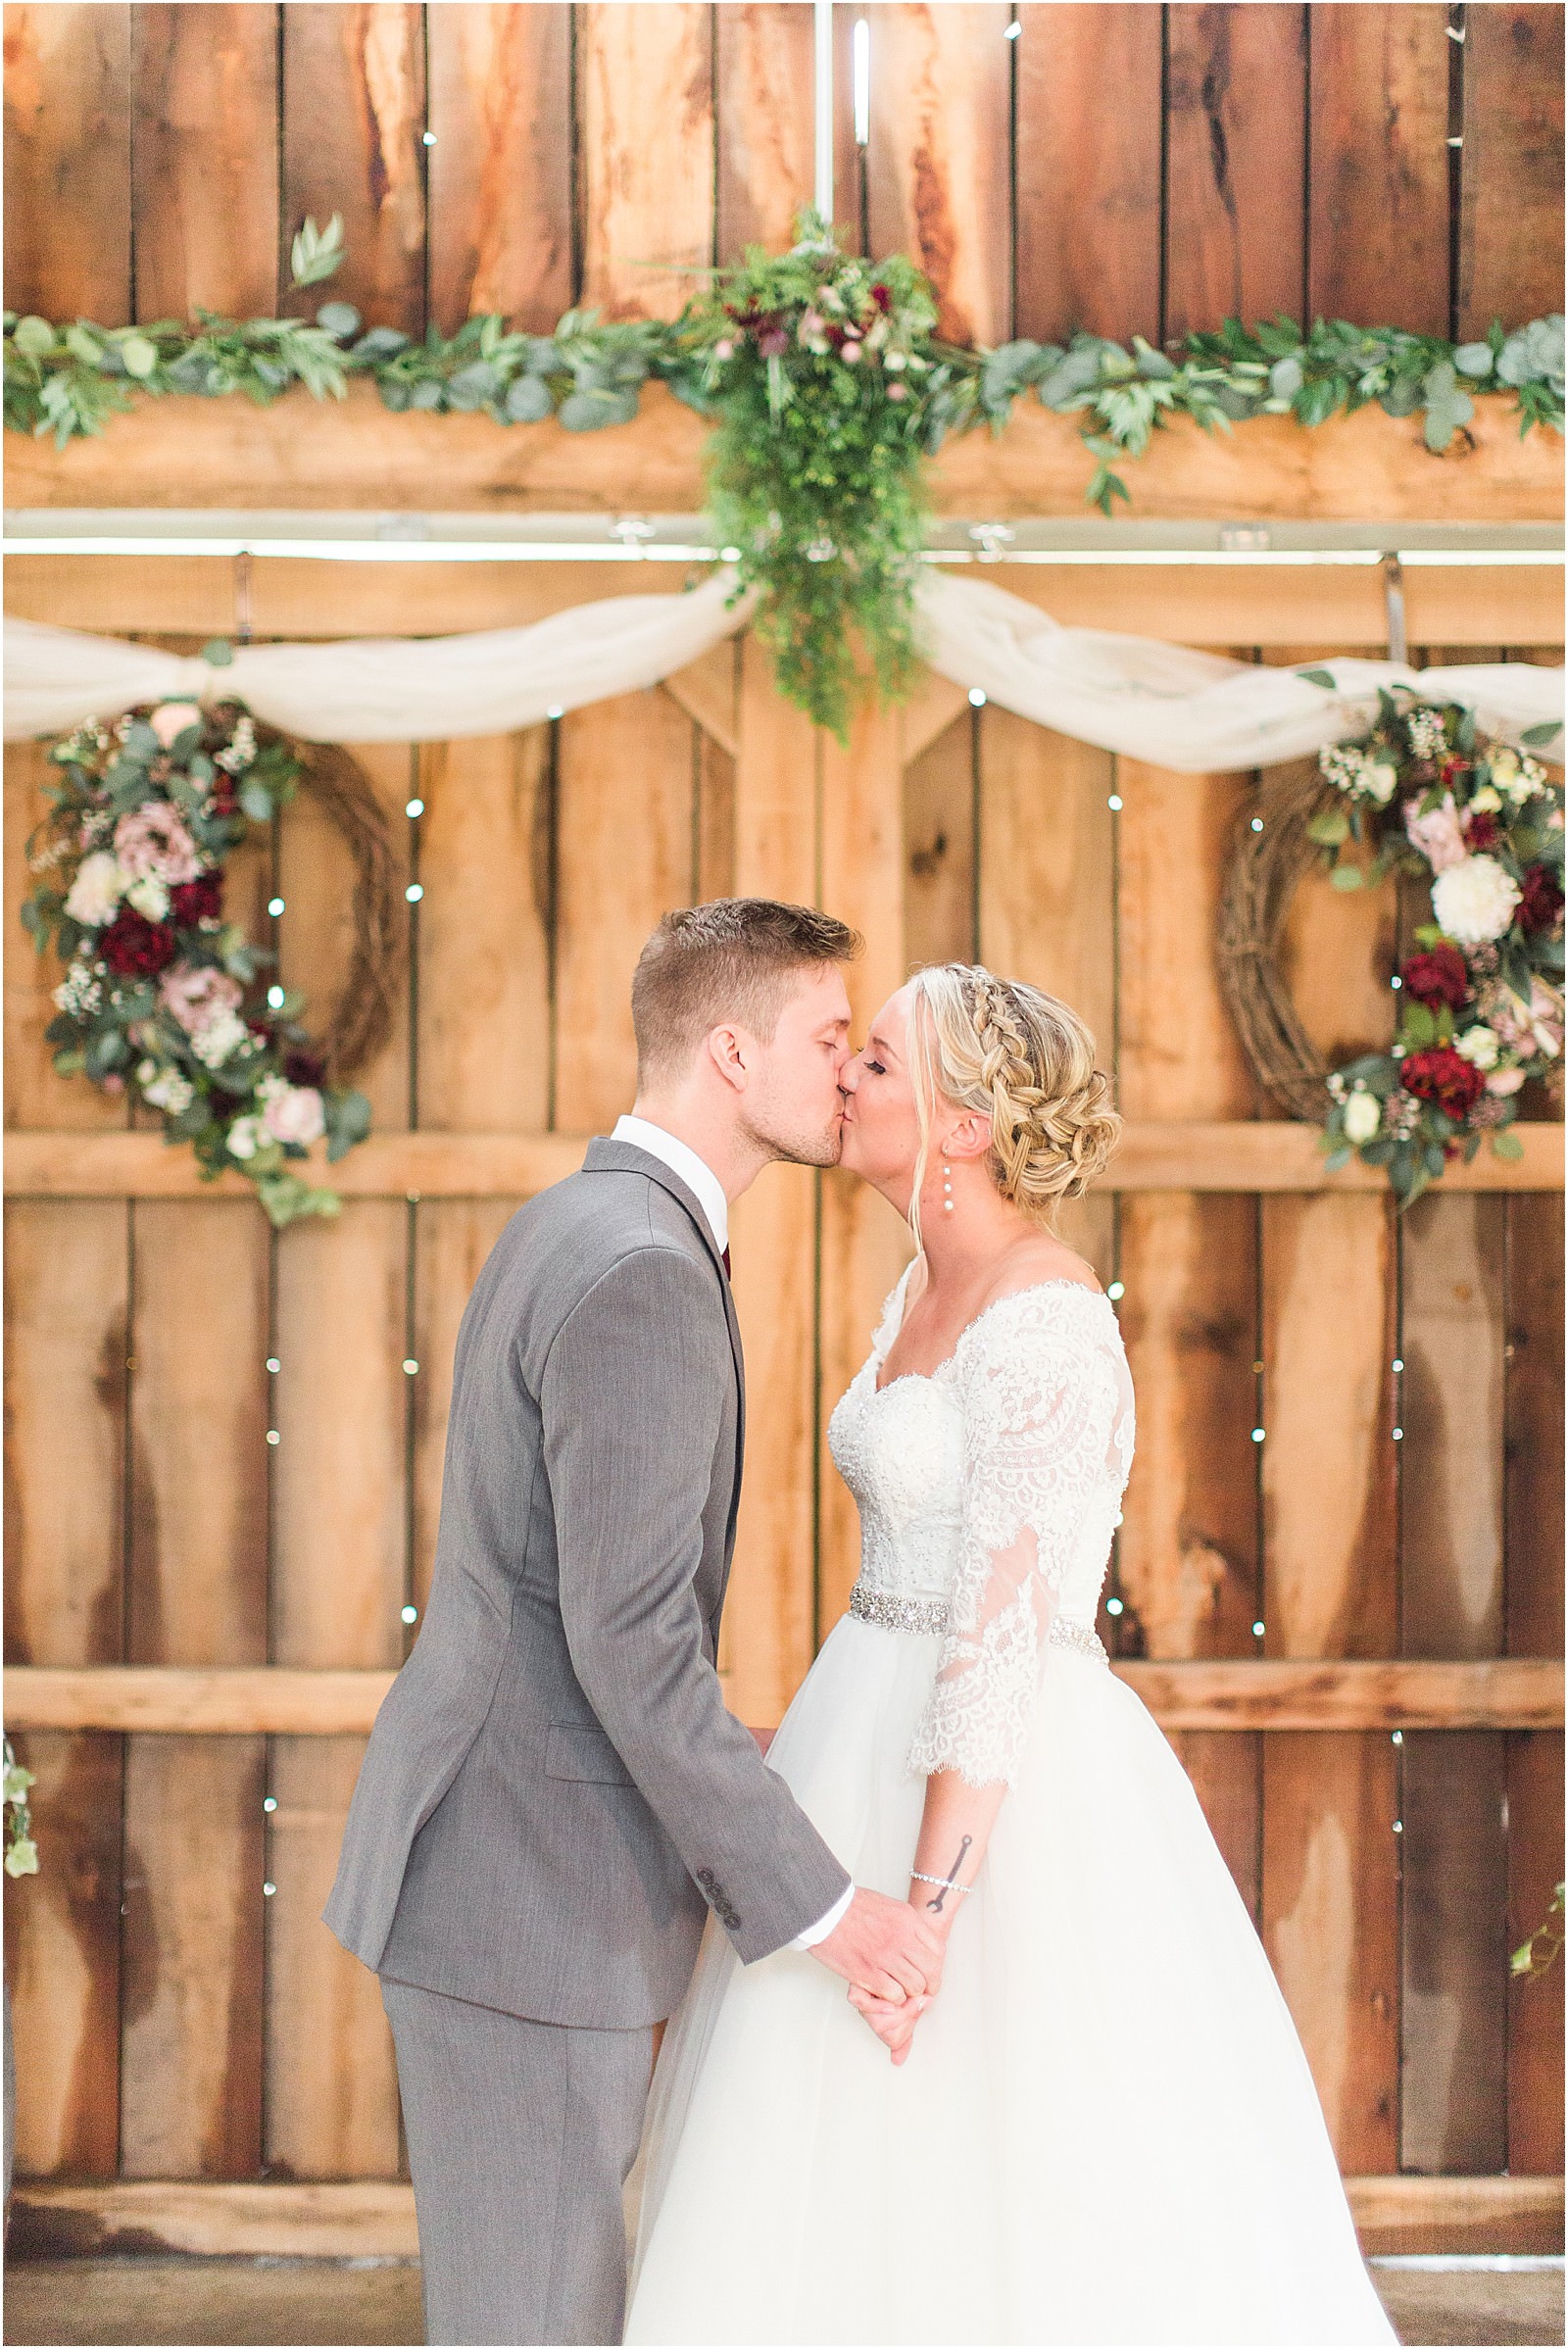 A Rainy Corner House Wedding | Rachel and Nick | Bret and Brandie Photography 0043.jpg